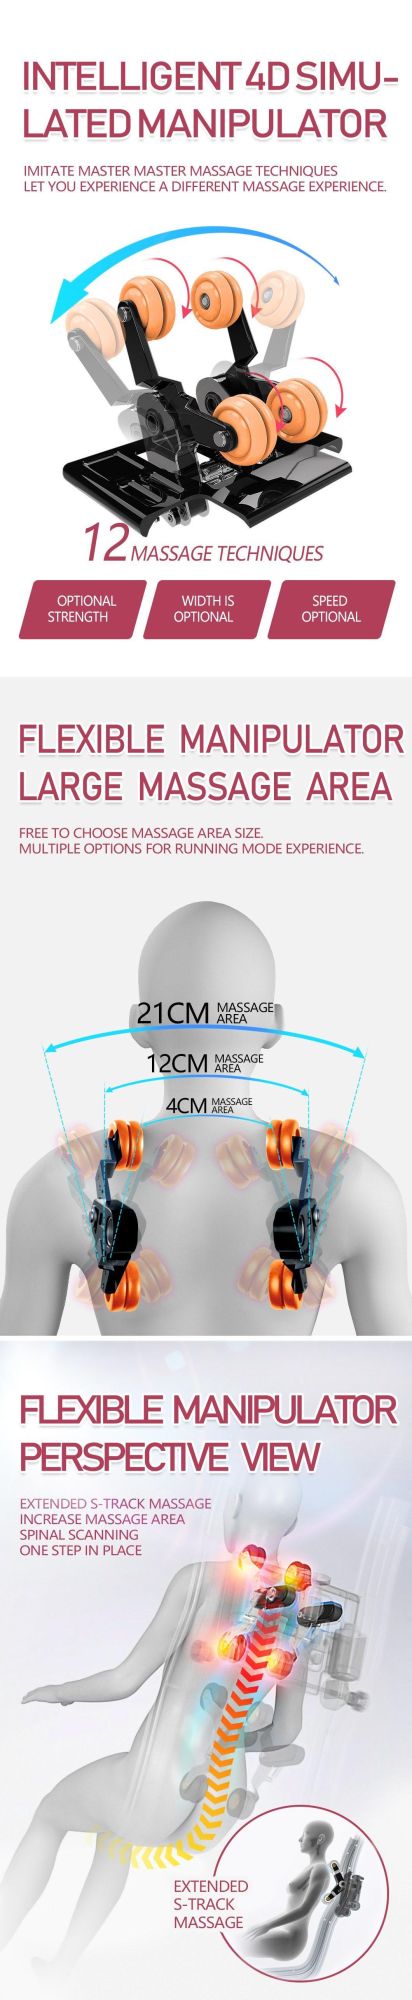 2021 Best Design Commercial Luxury Cheap 3D Zero Gravity Shiatsu Massage Chair for Sale